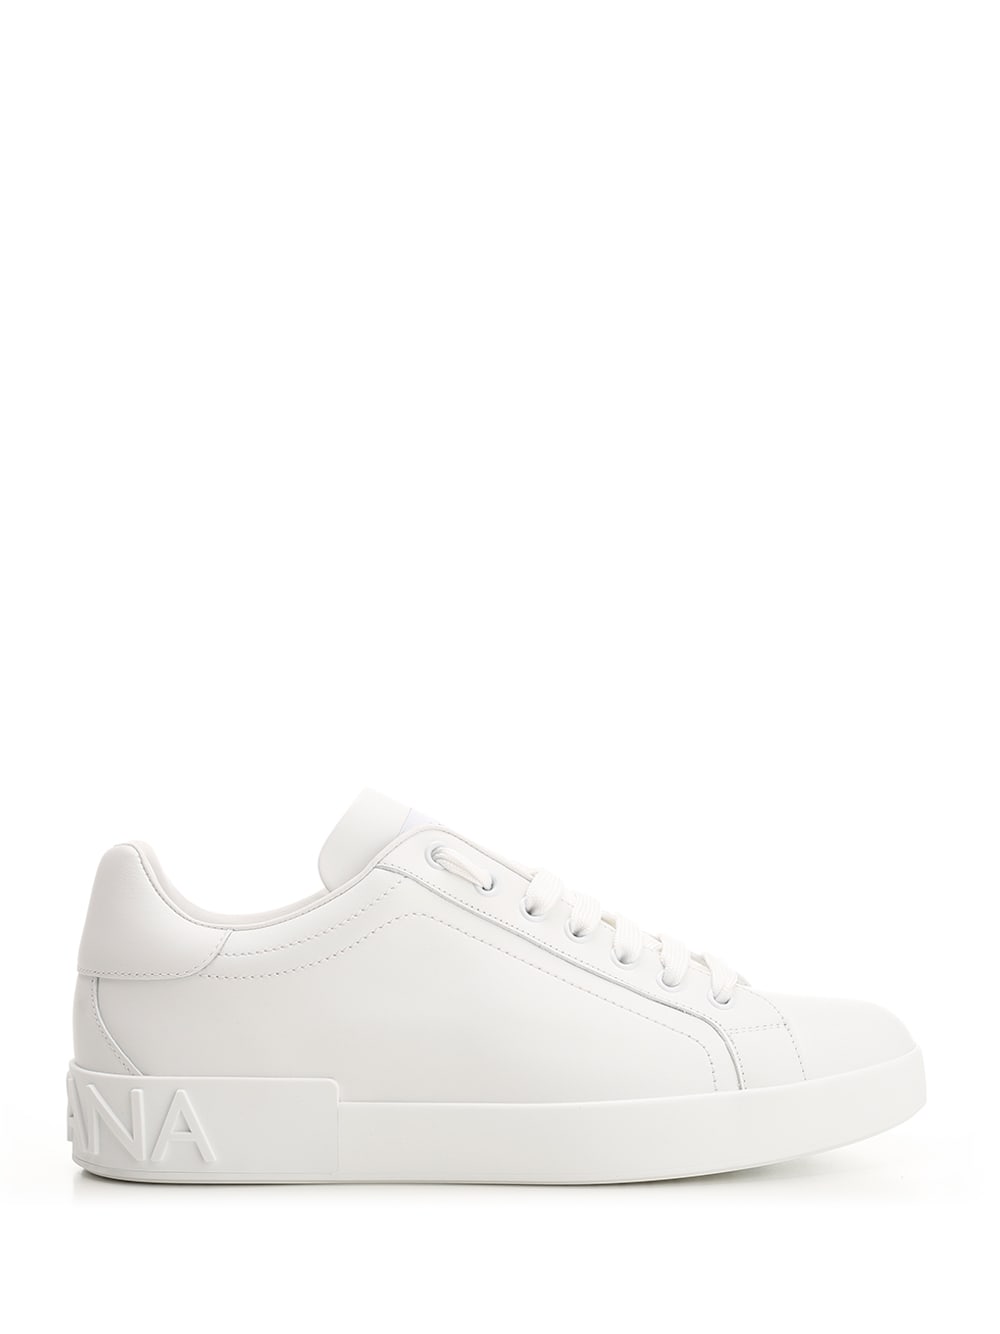 Dolce & Gabbana Portofino Low Sneaker In White